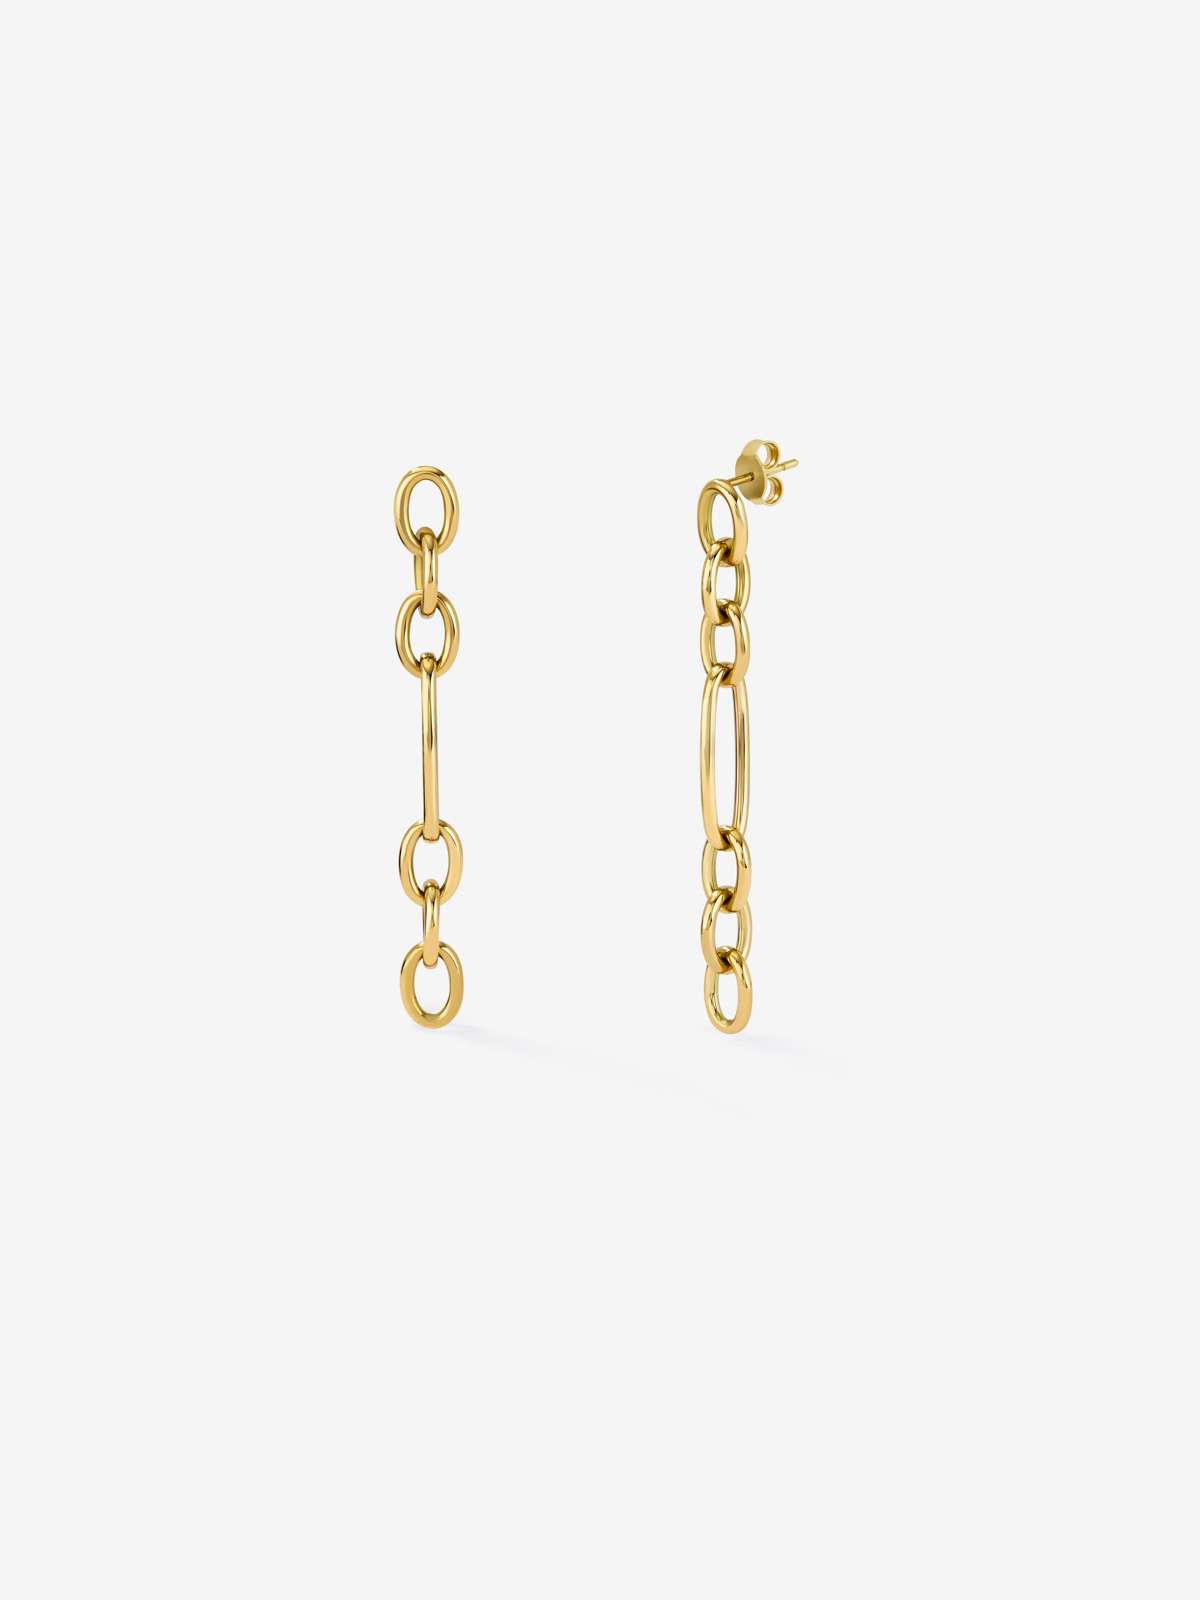 Long Forza chain earrings in 18k yellow gold